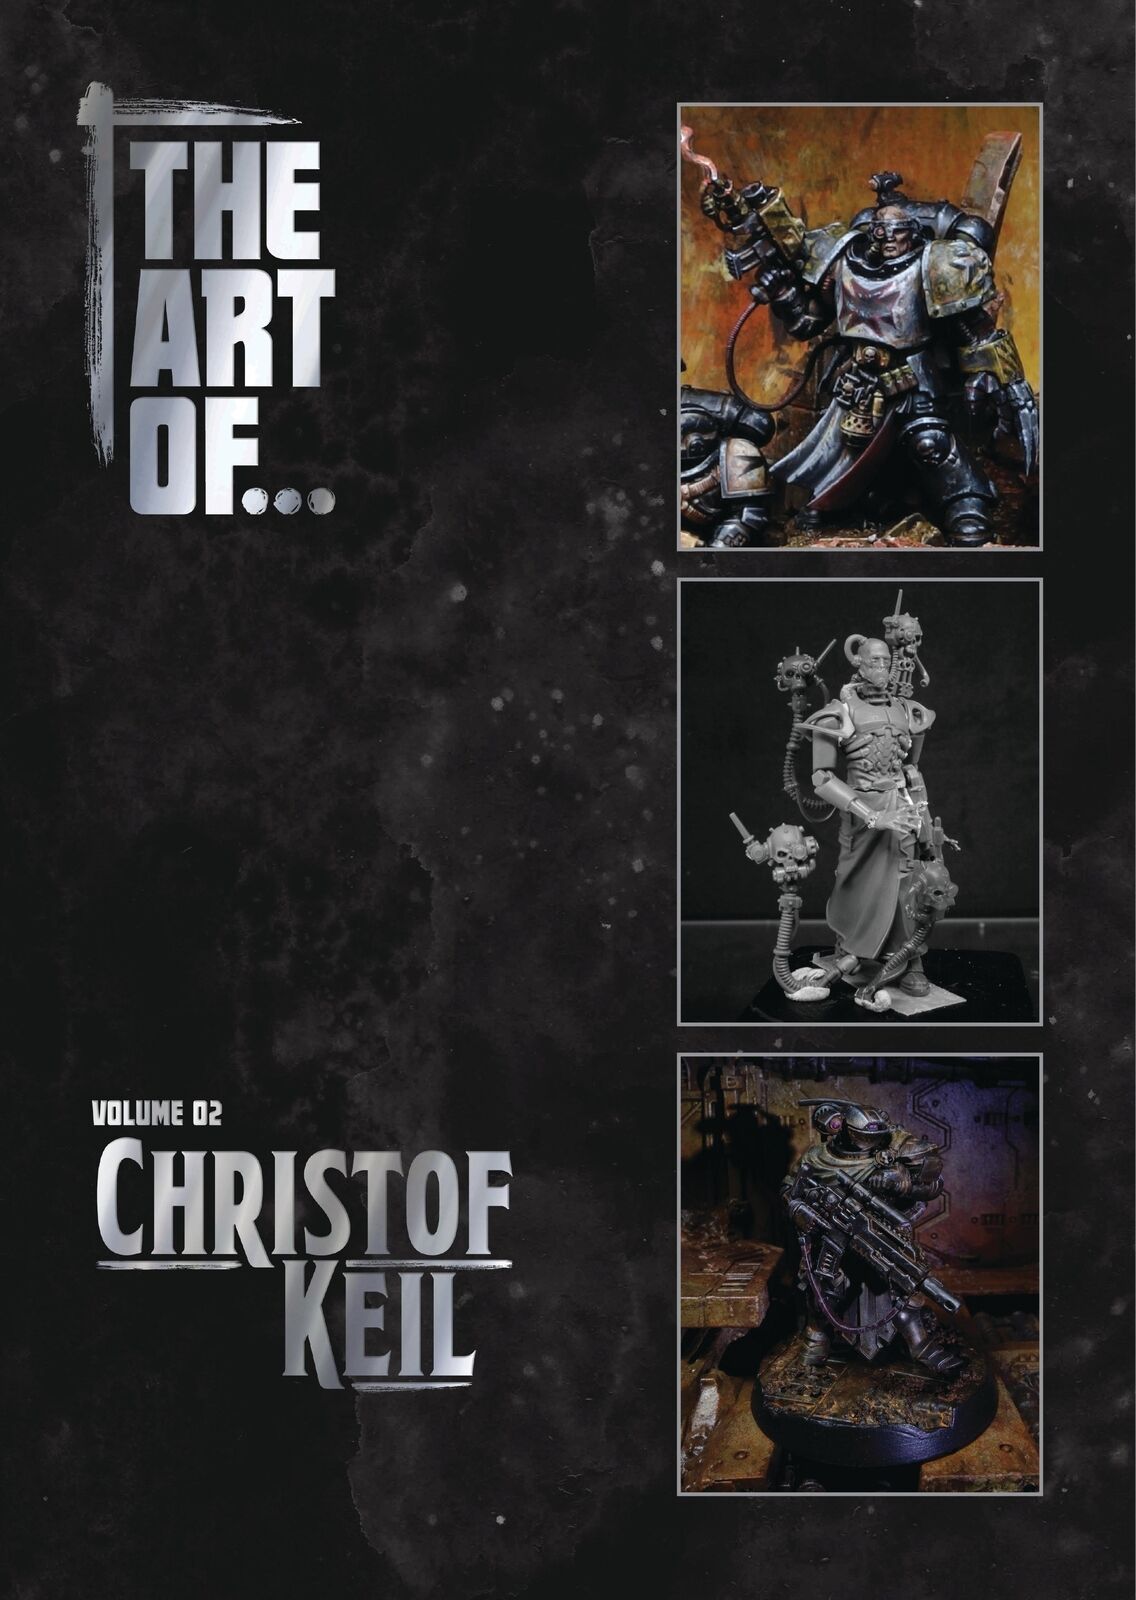 The Art of... Volume 02 Christof Keil Hardcover Book